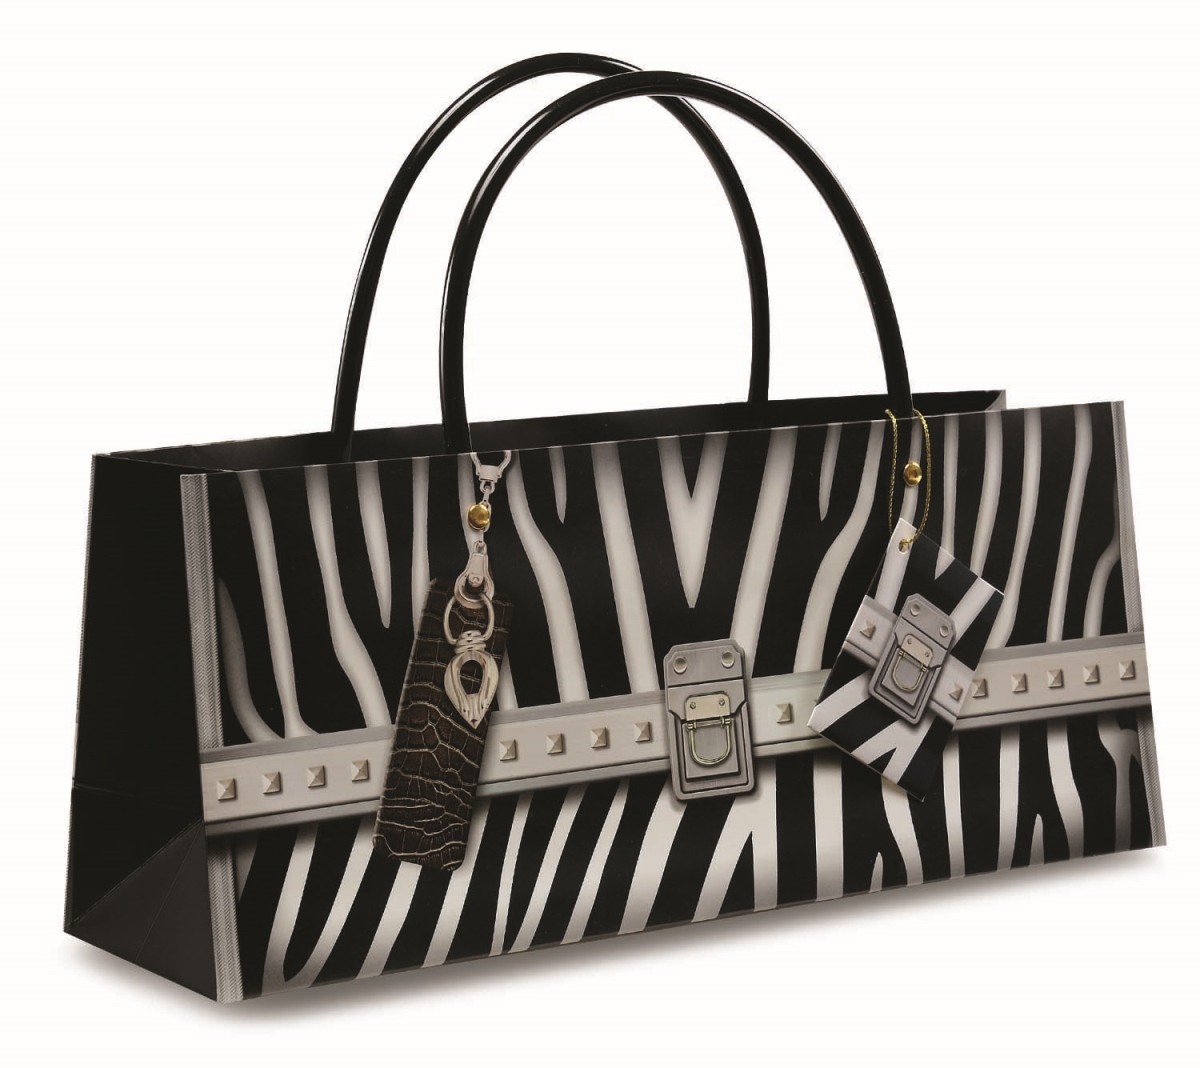 17784 Zebra Design Purse Bag With Plastic Tubular Handles